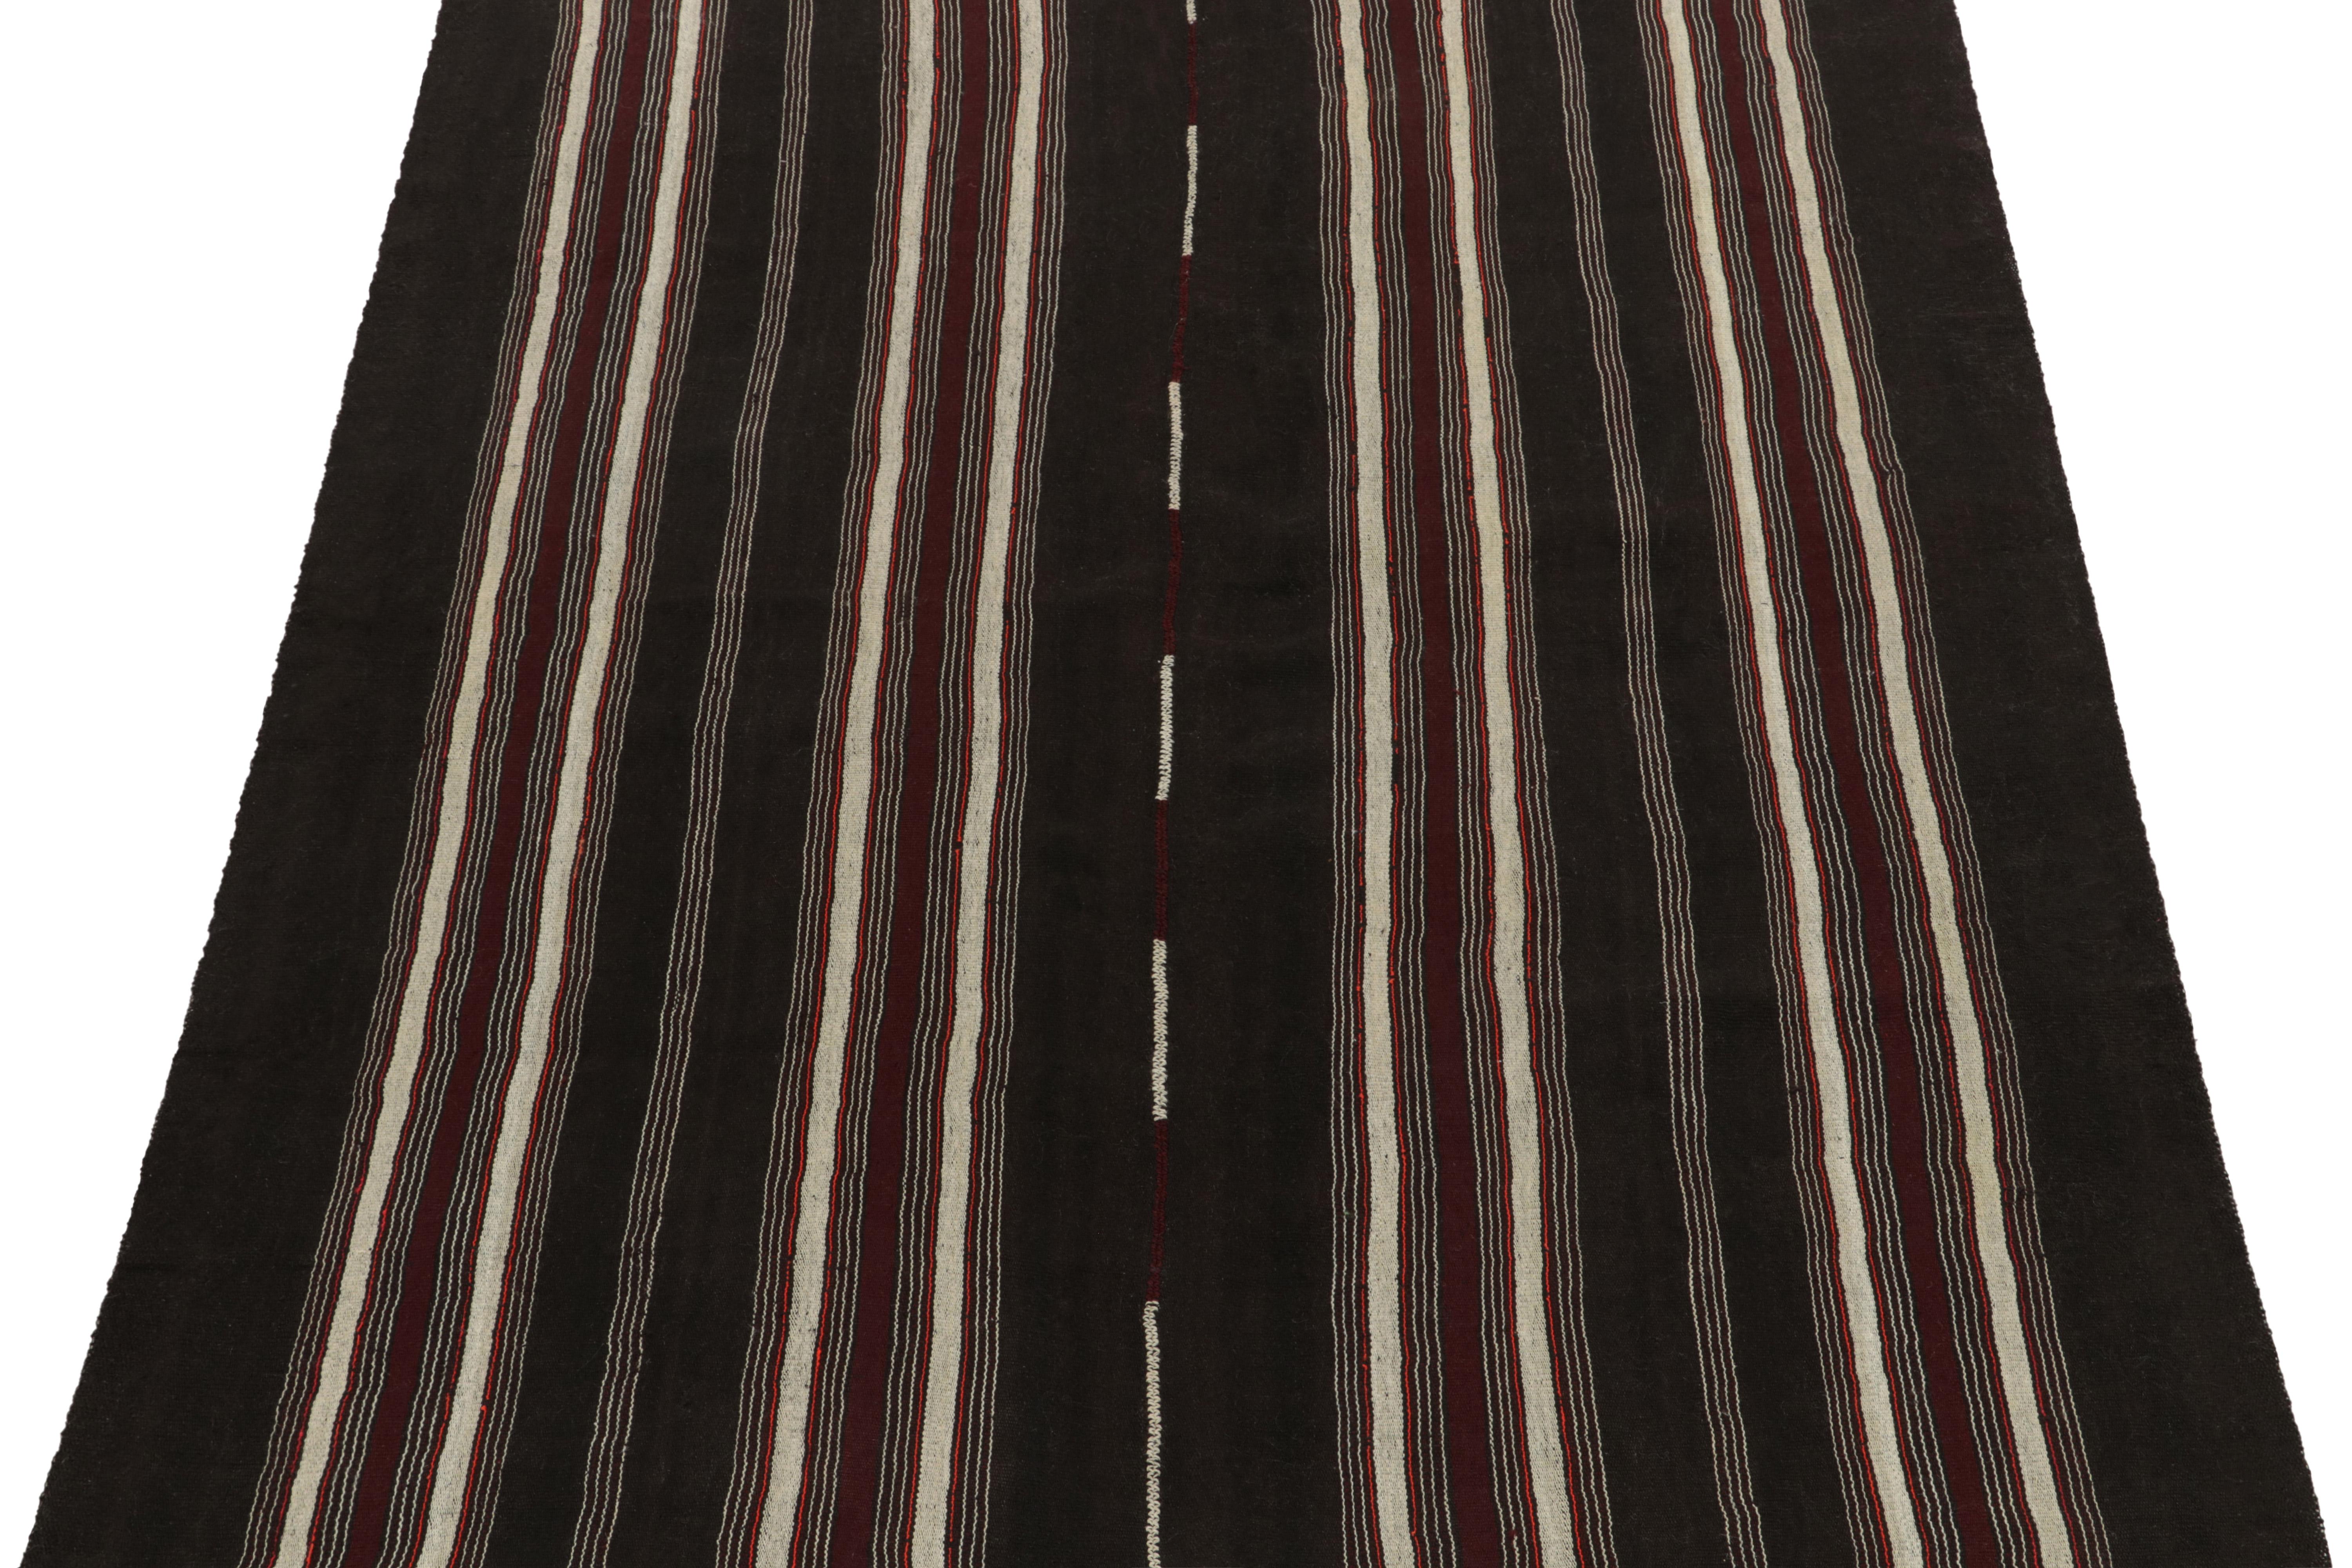 Turkish Vintage Kilim Rug in Deep Brown with Red & White Stripe Pattern by Rug & Kilim For Sale